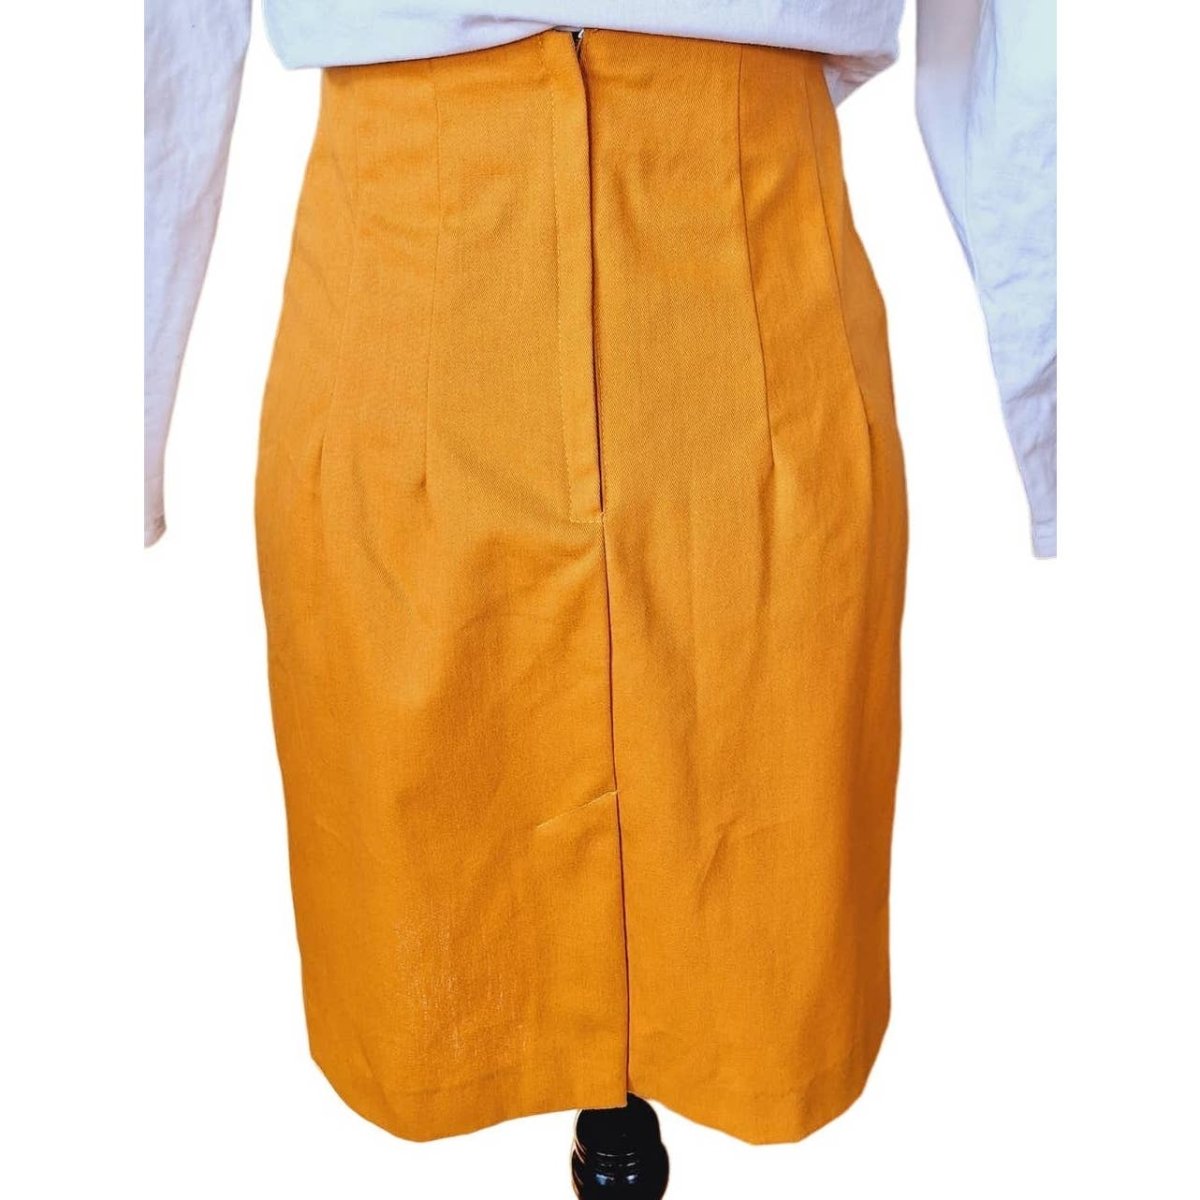 Vintage 80s Mustard Yellow High Waist Mini Pencil Skirt Size XS/S Waist 25" - themallvintage The Mall Vintage